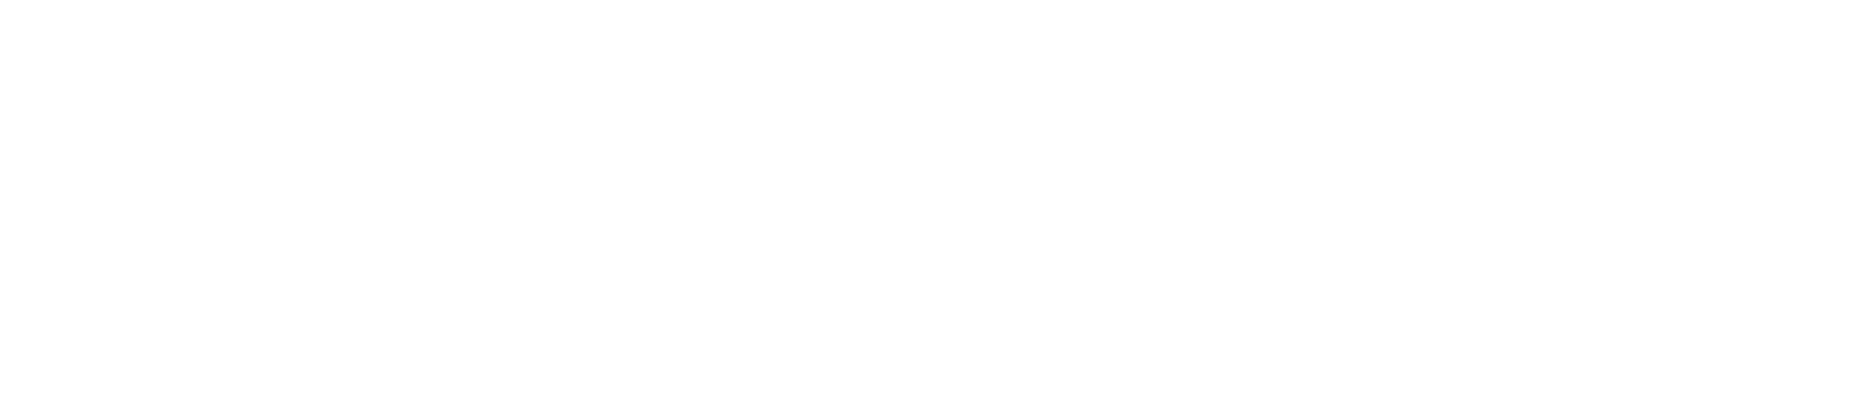 Midweek Cleanse, Miami Beach FL